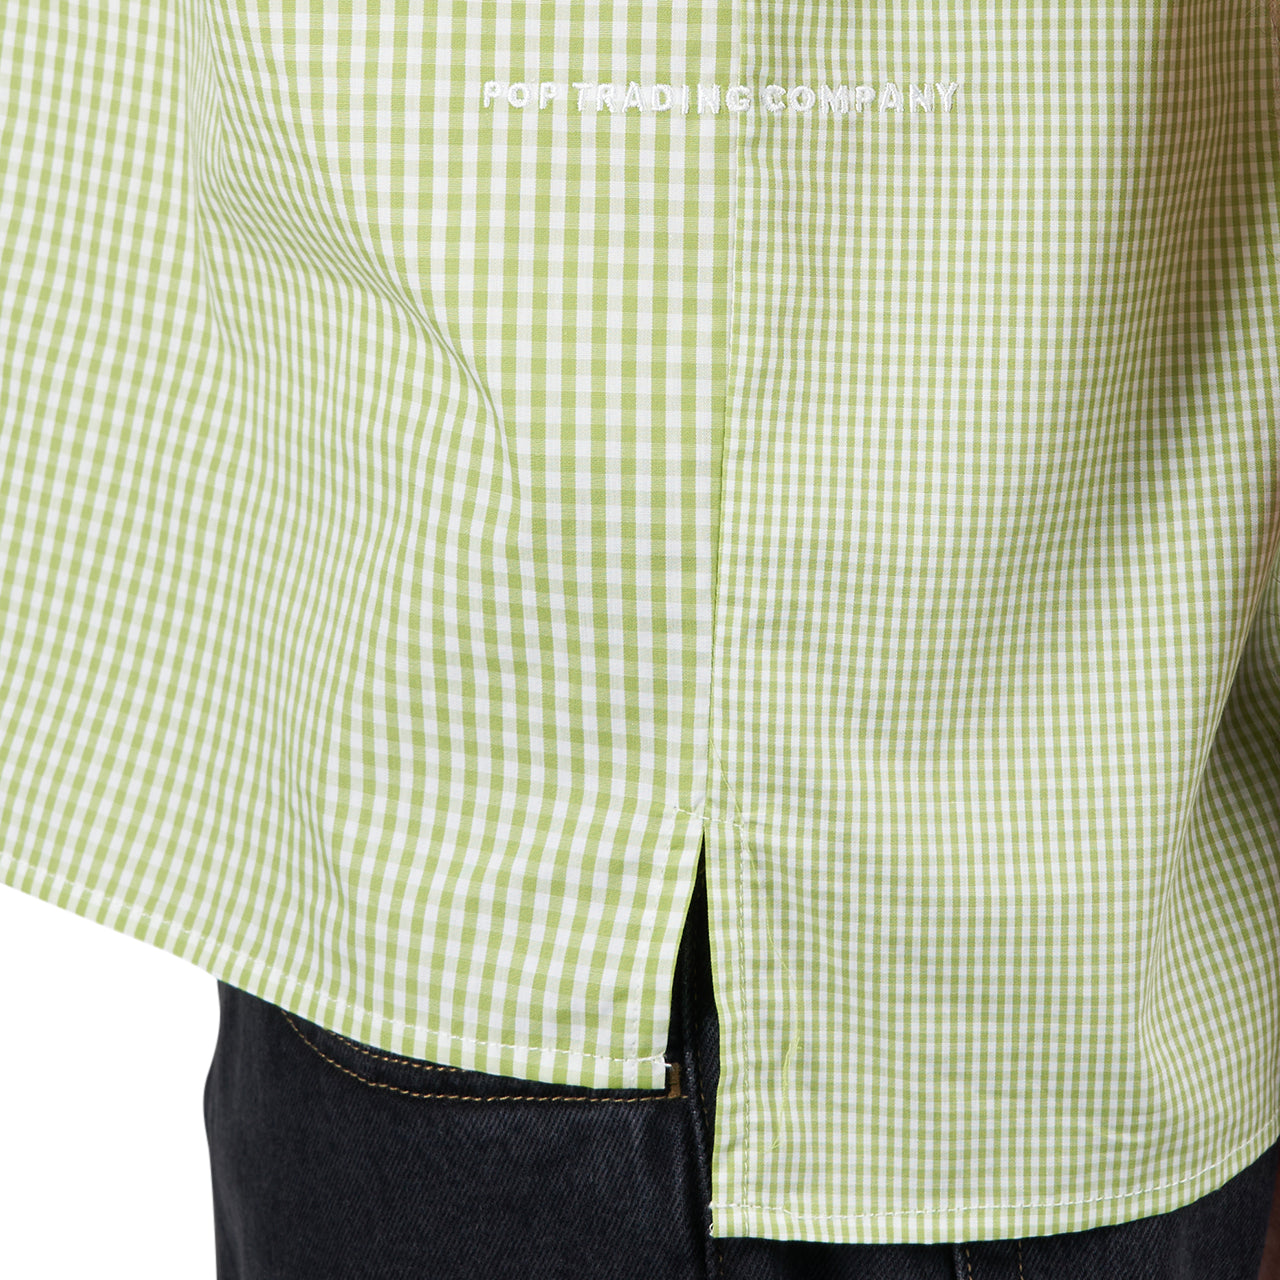 Crinckle Pop Vinny Shirt Green/White Stripes - JPH Store